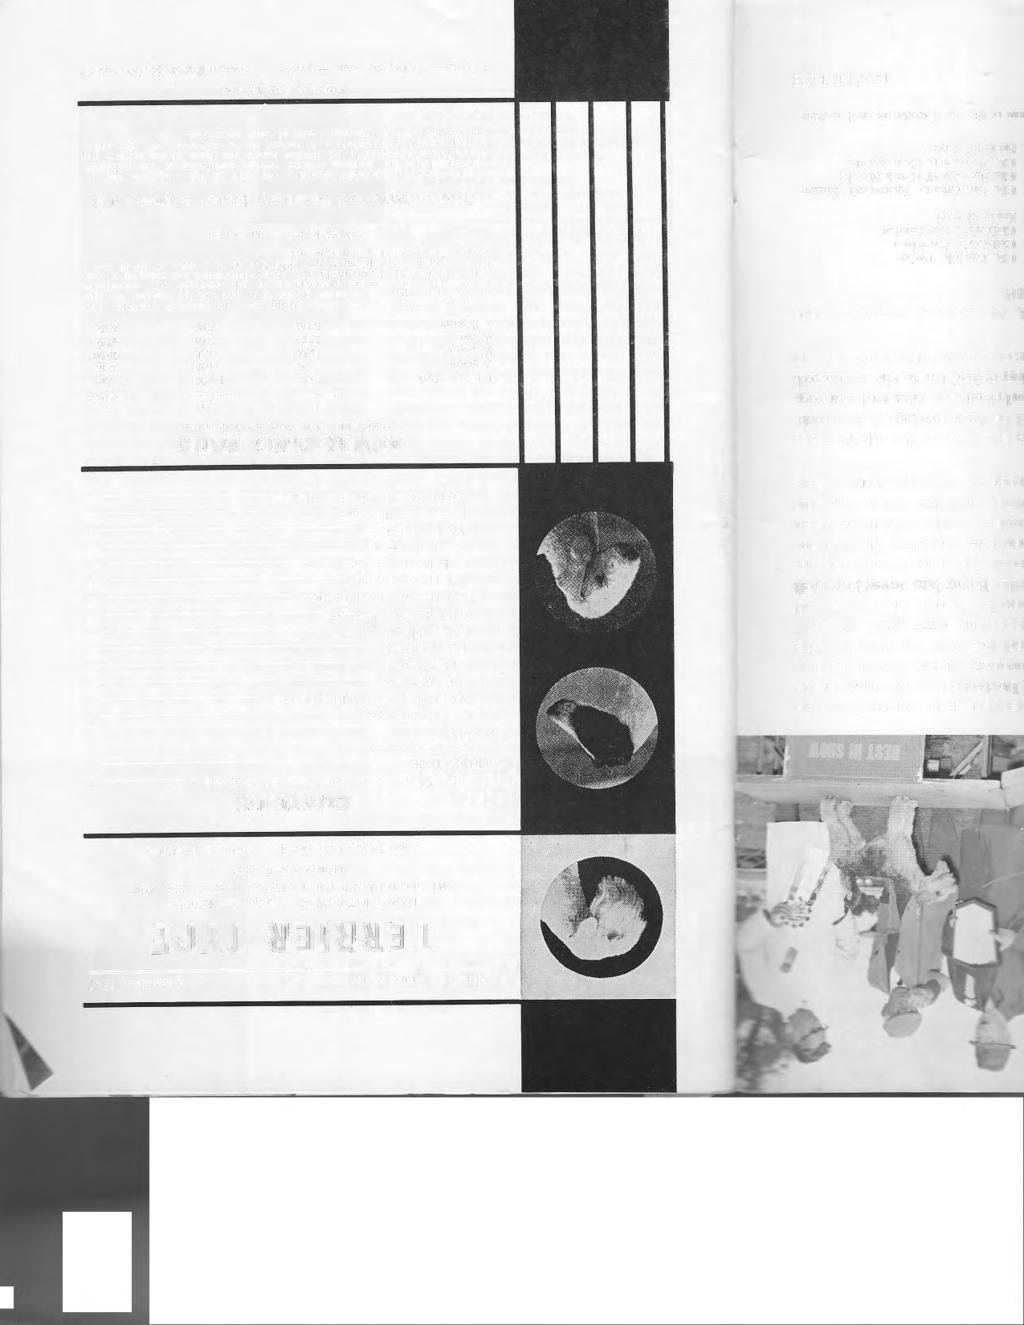 Volume YI, Number 12 December, 1967 DANIEL KIEDROWSKI - Editor and Publisher 4961 OLD DUBLIN ROAD, HAYWARD, CALIFORNIA 94546 PHONE: 415-581-6062 Second Class Postage Pa id at Hayward, California